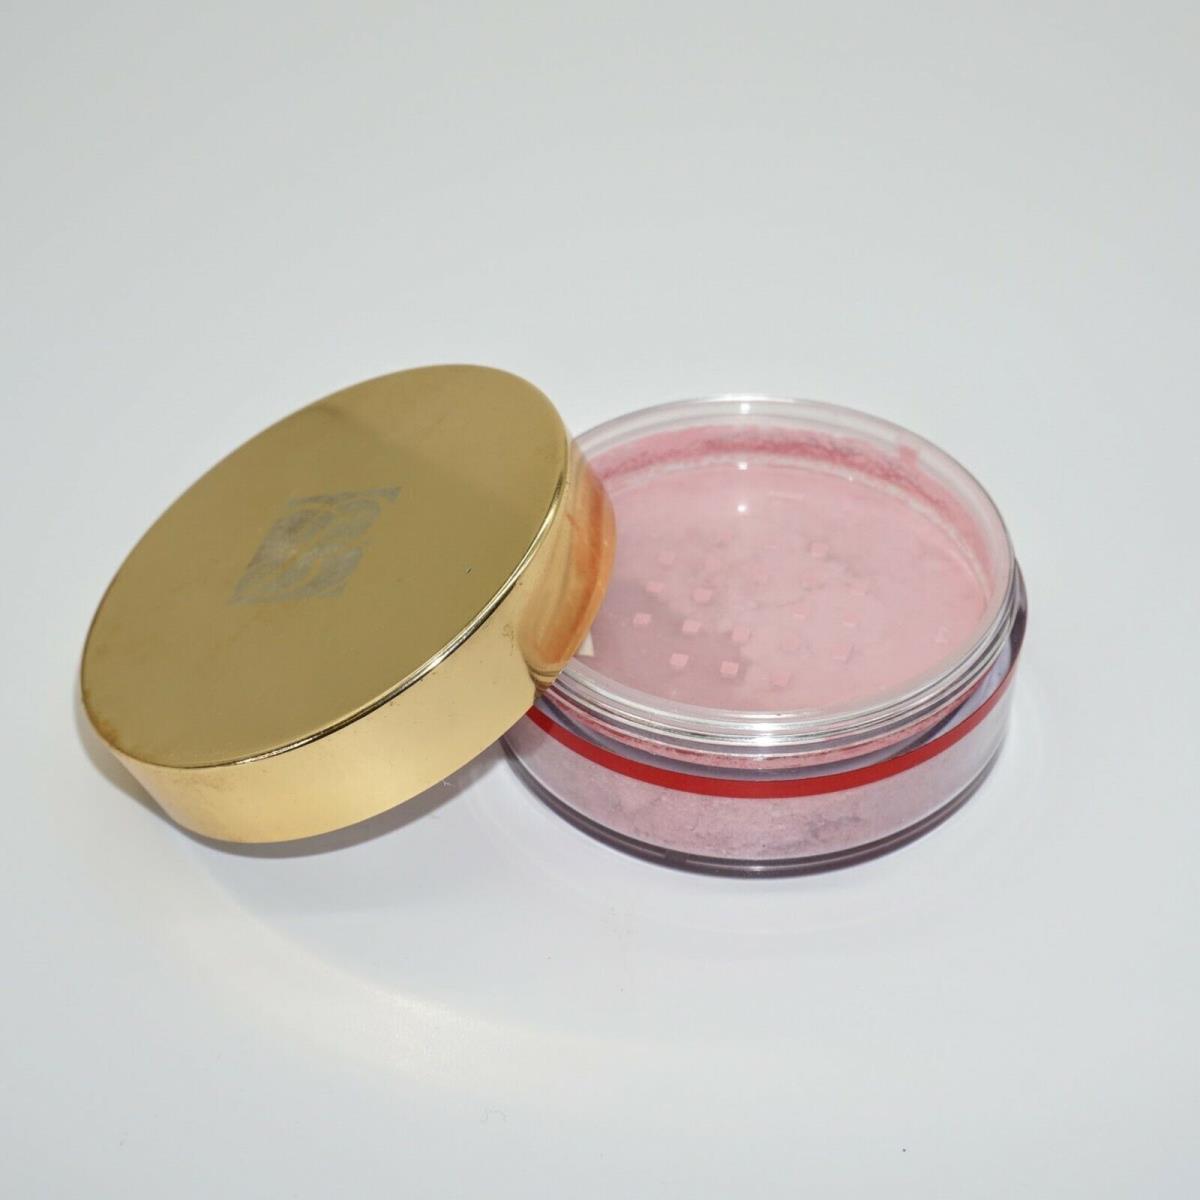 Estee Lauder Nutritious Loose Powder Makeup Choose Shade See Description 16 Radiant Pink